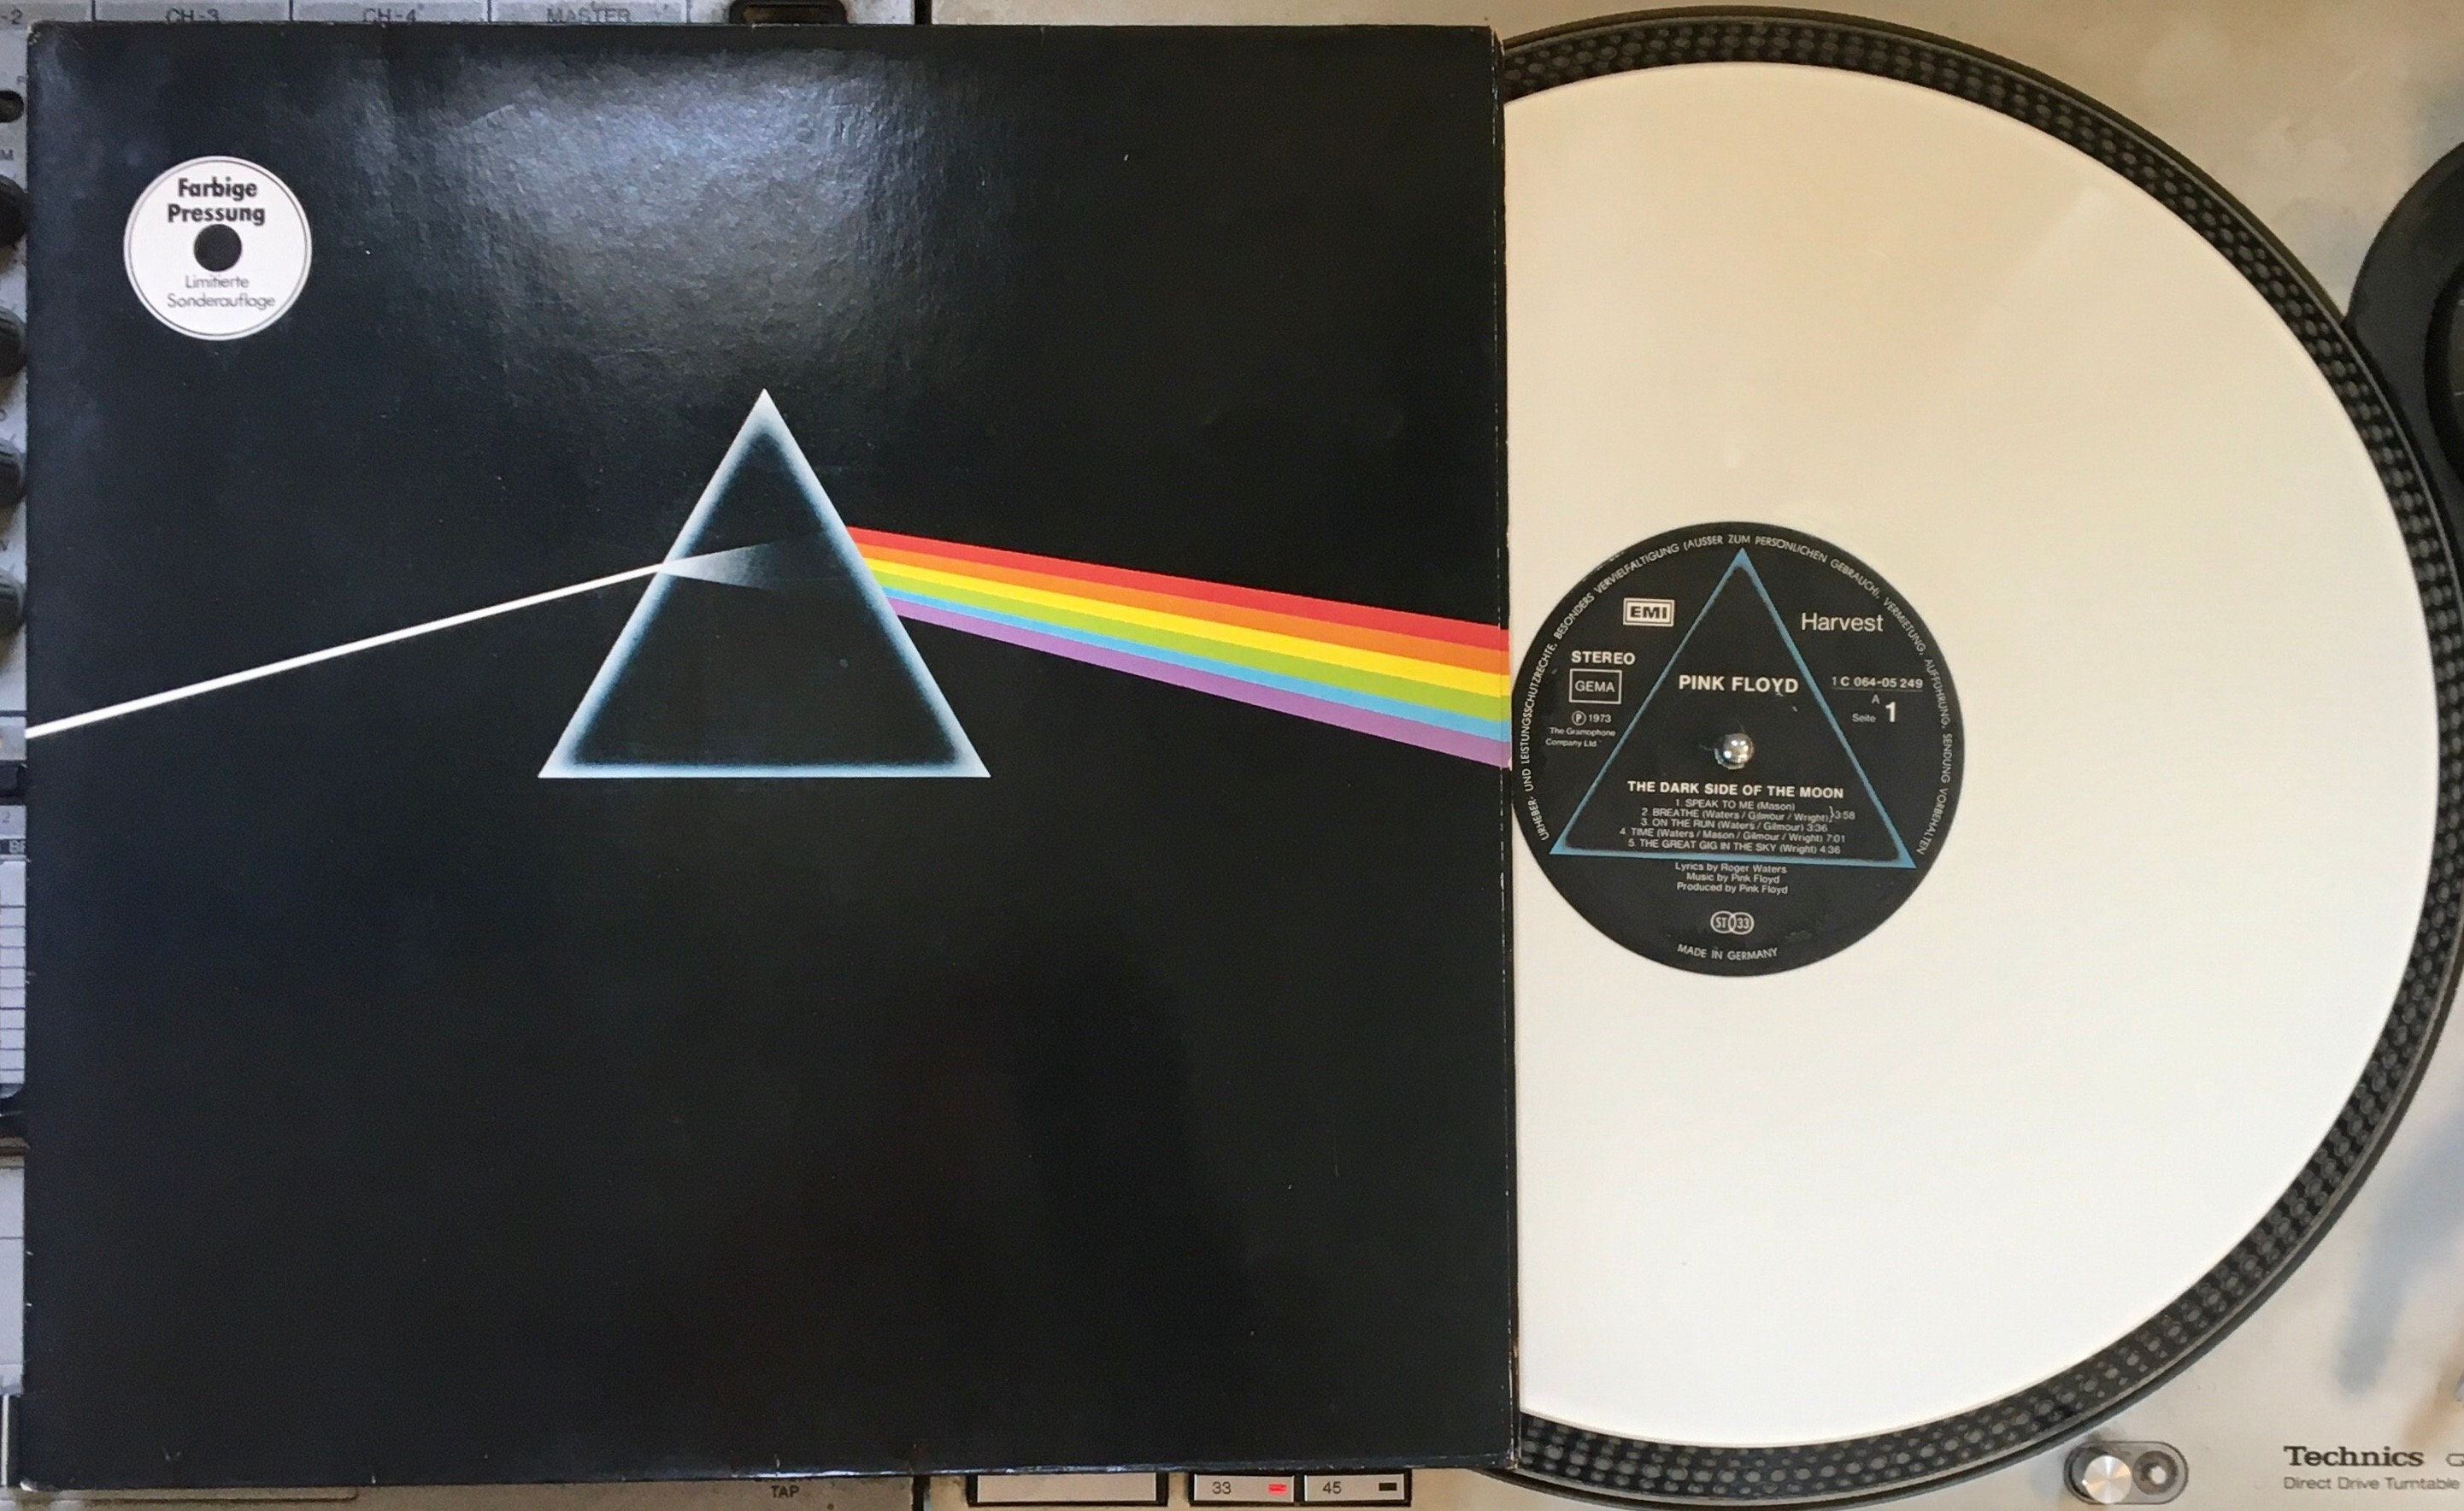 GENERICO Vinilo Pink Floyd - The Dark Side Of The Moon